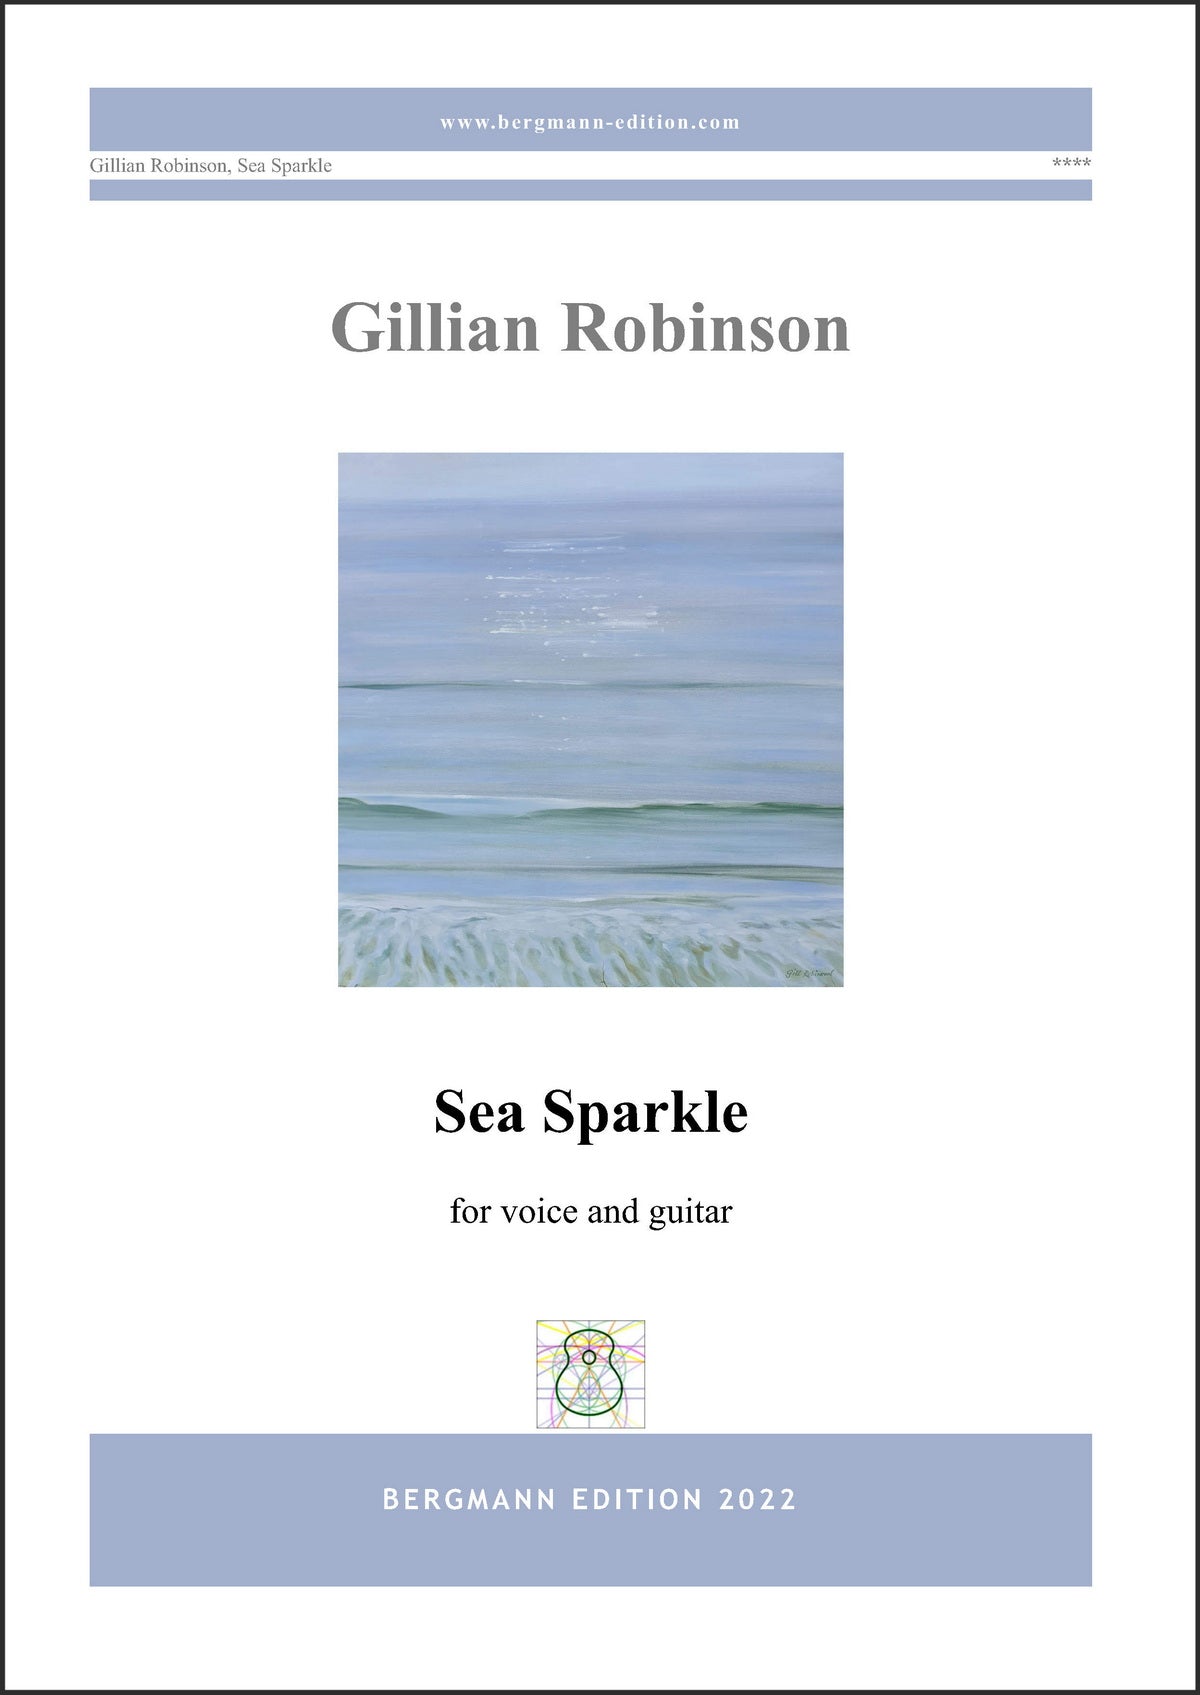 Sea Sparkle, by Gillian Robinson - cover